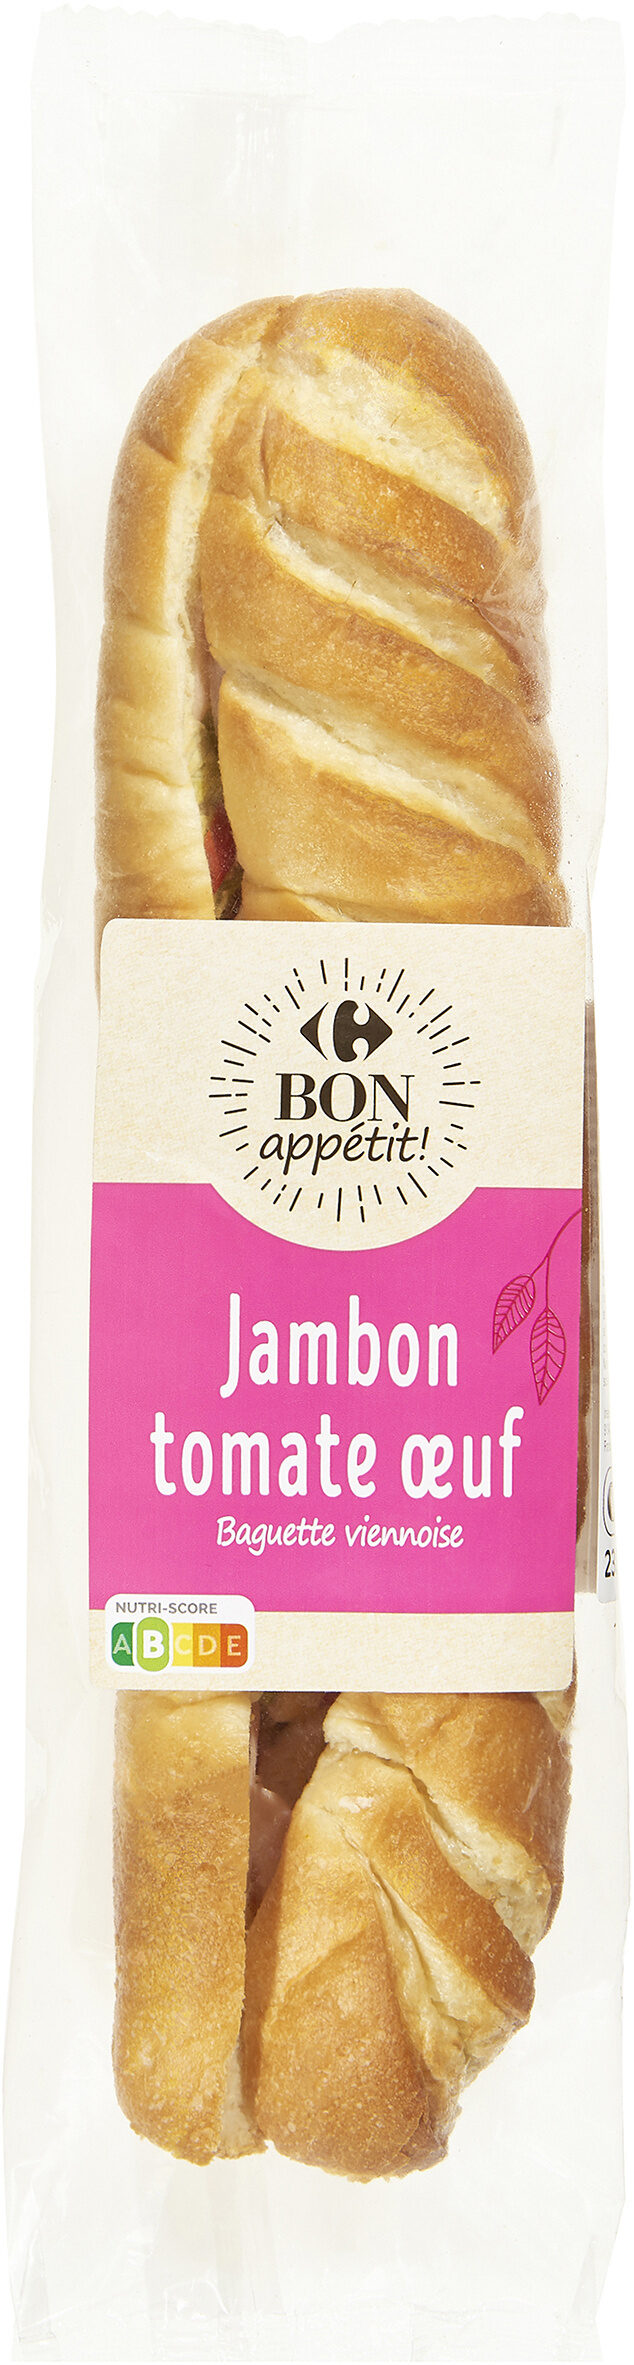 Jambon tomate œuf - Product - fr